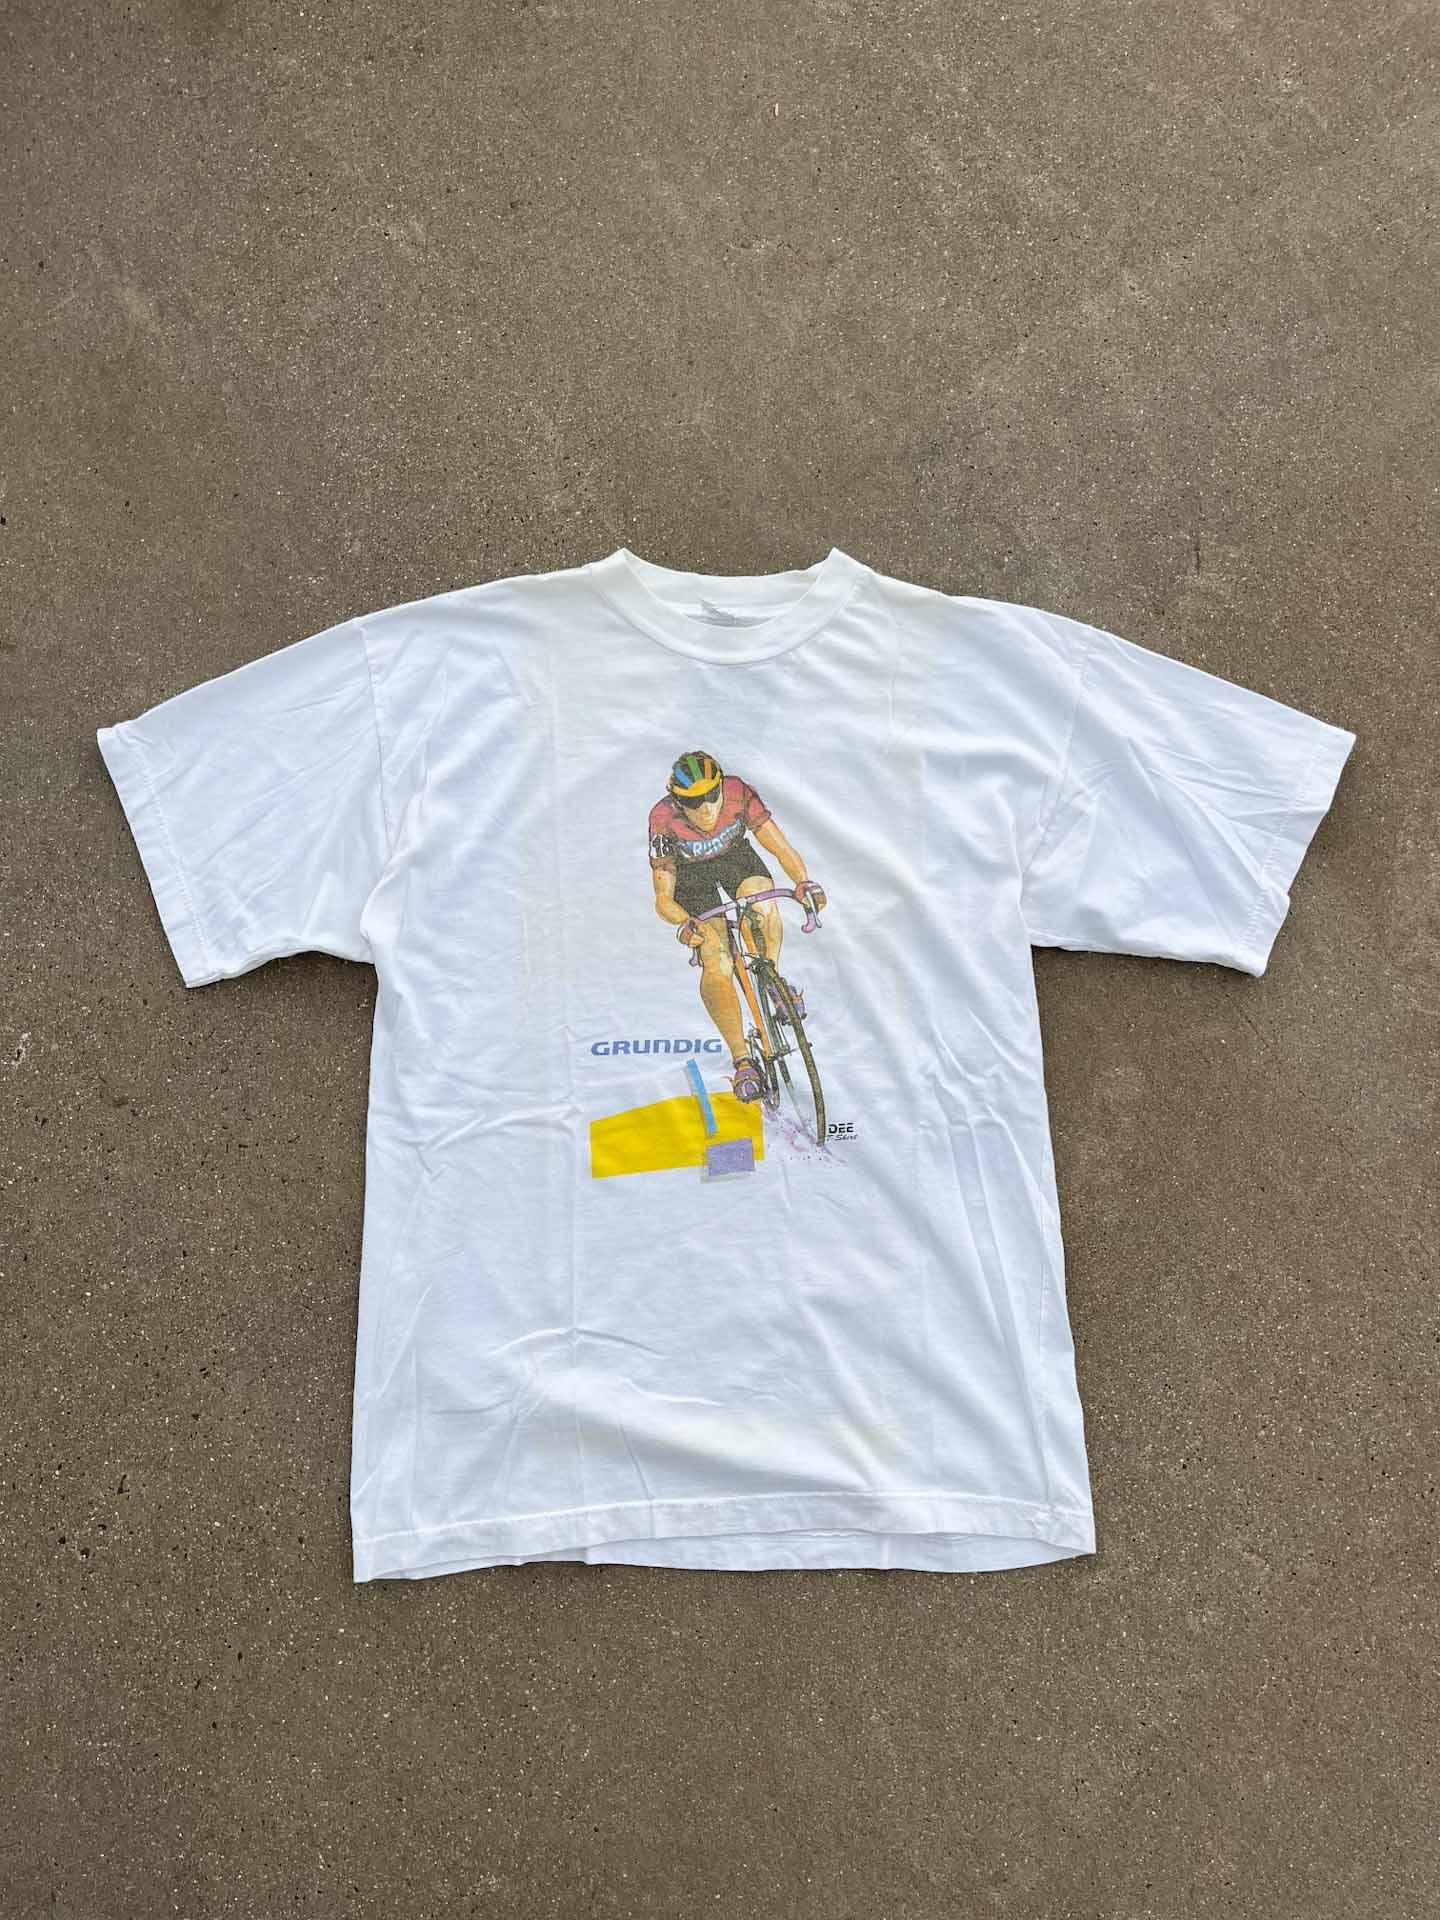 Grundig Cup 1991 T-Shirt - secondvintage